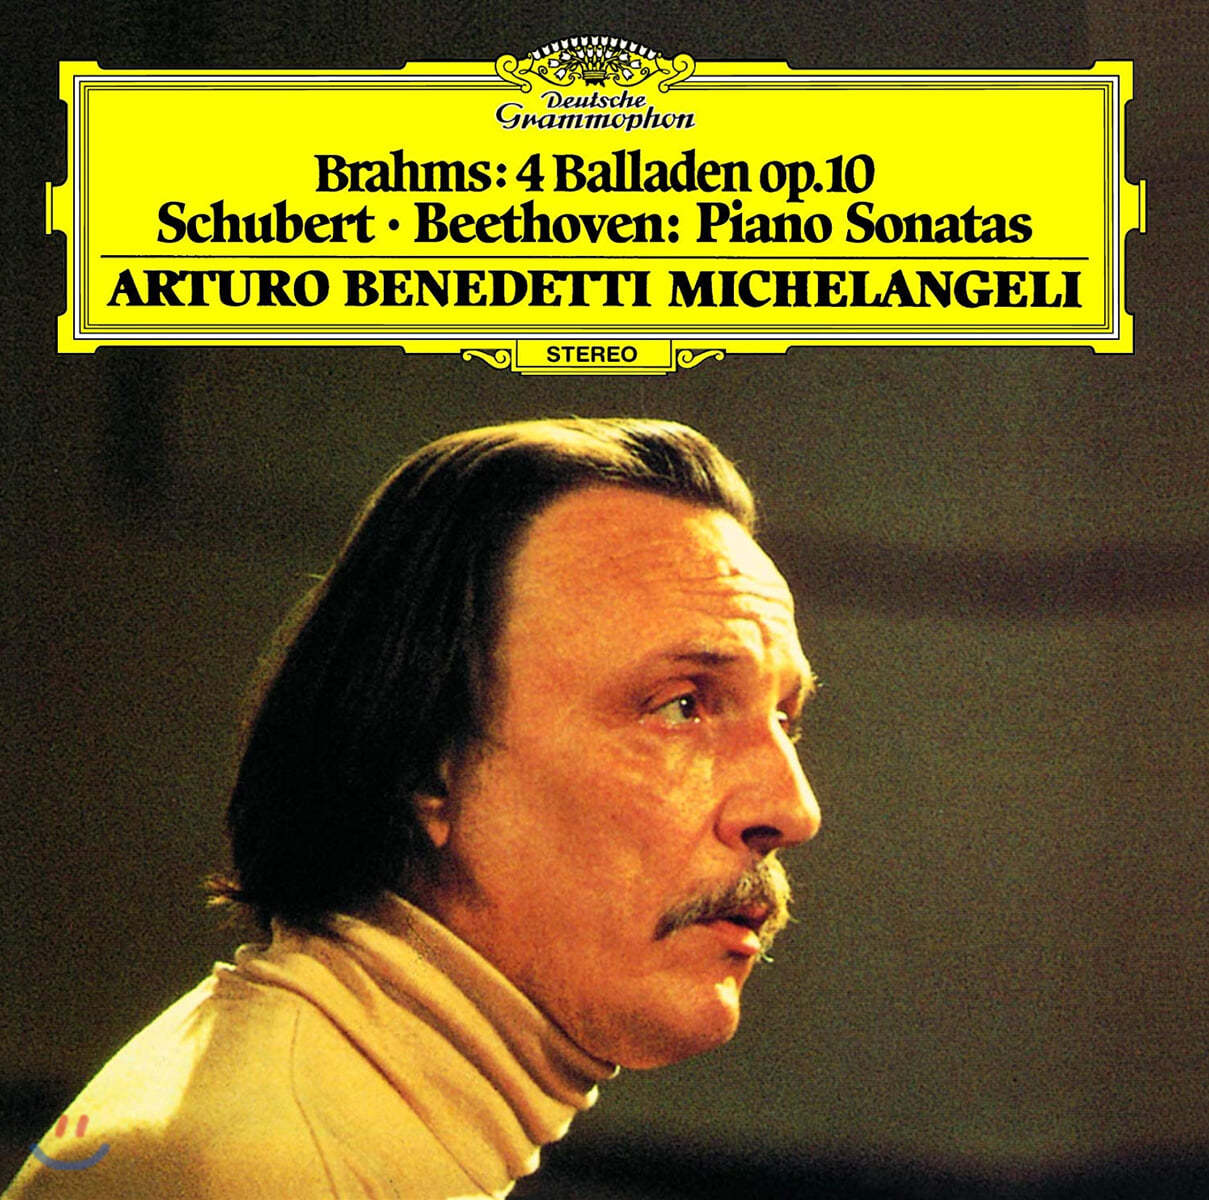 Arturo Benedetti Michelangeli 브람스: 4개의 발라드 / 슈베르트: 소나타 / 베토벤: 소나타 4번 (Brahms: 4 Ballades / Schubert: Sonata D537 / Beethoven: Sonata No.4)